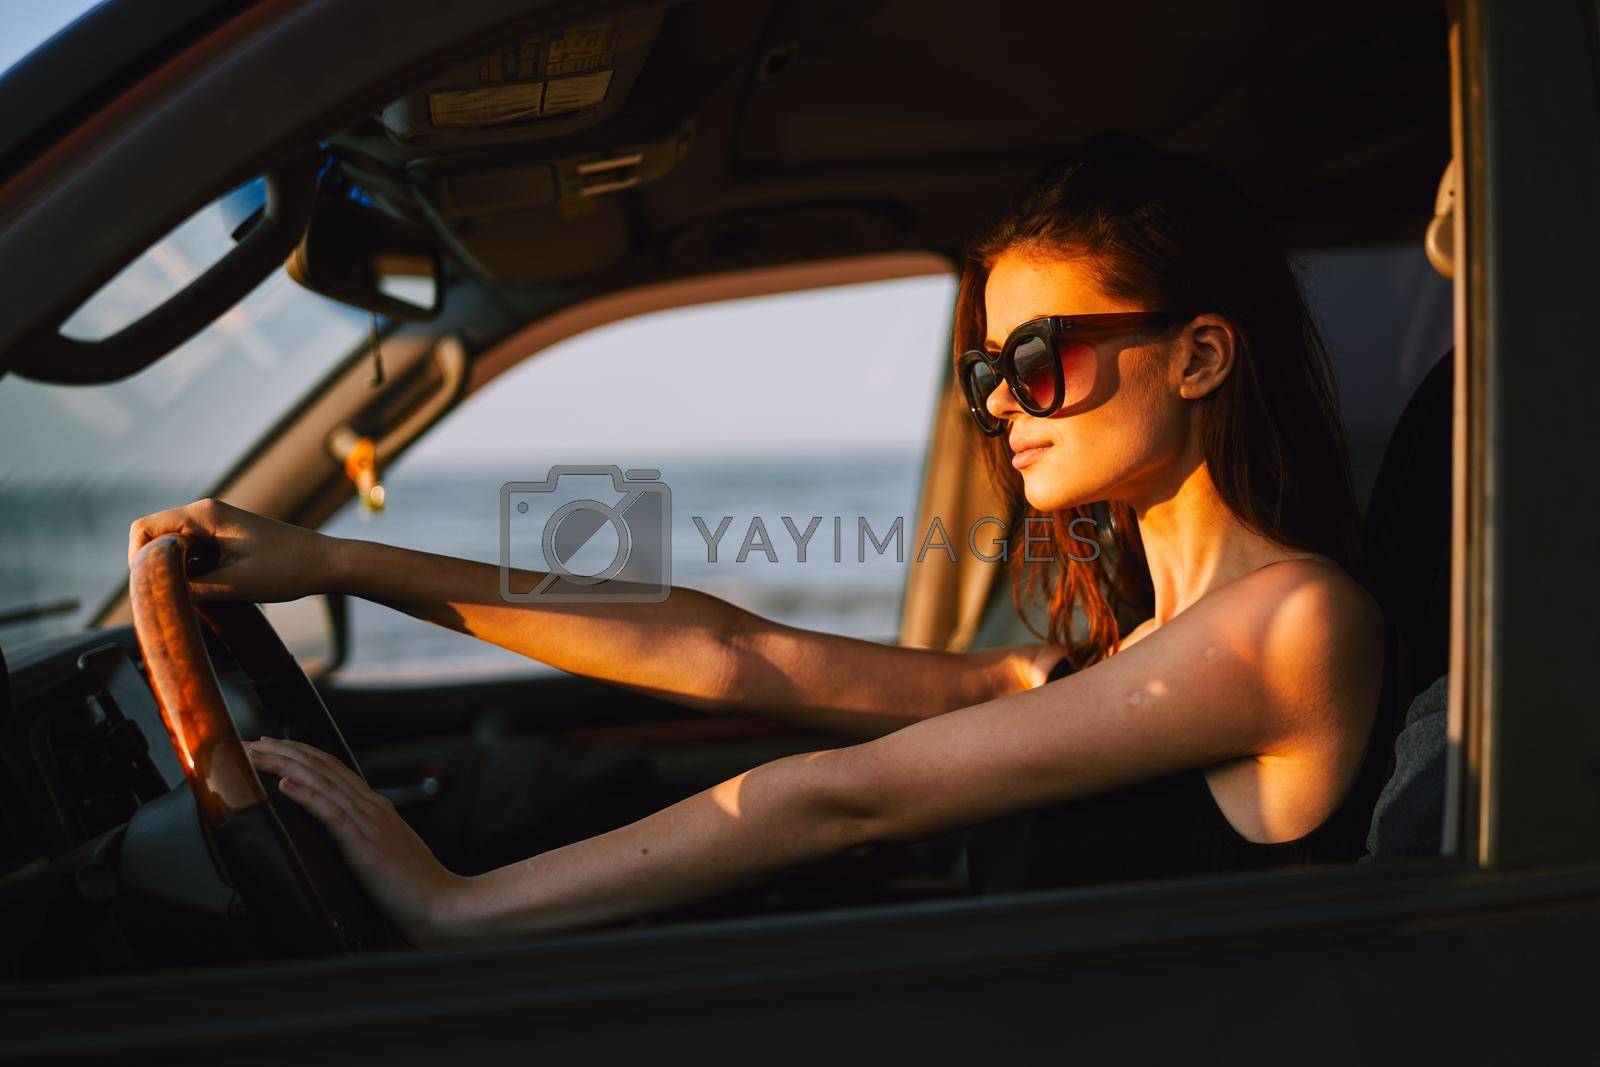 woman driving in car trip posing fashion travel. High quality photo